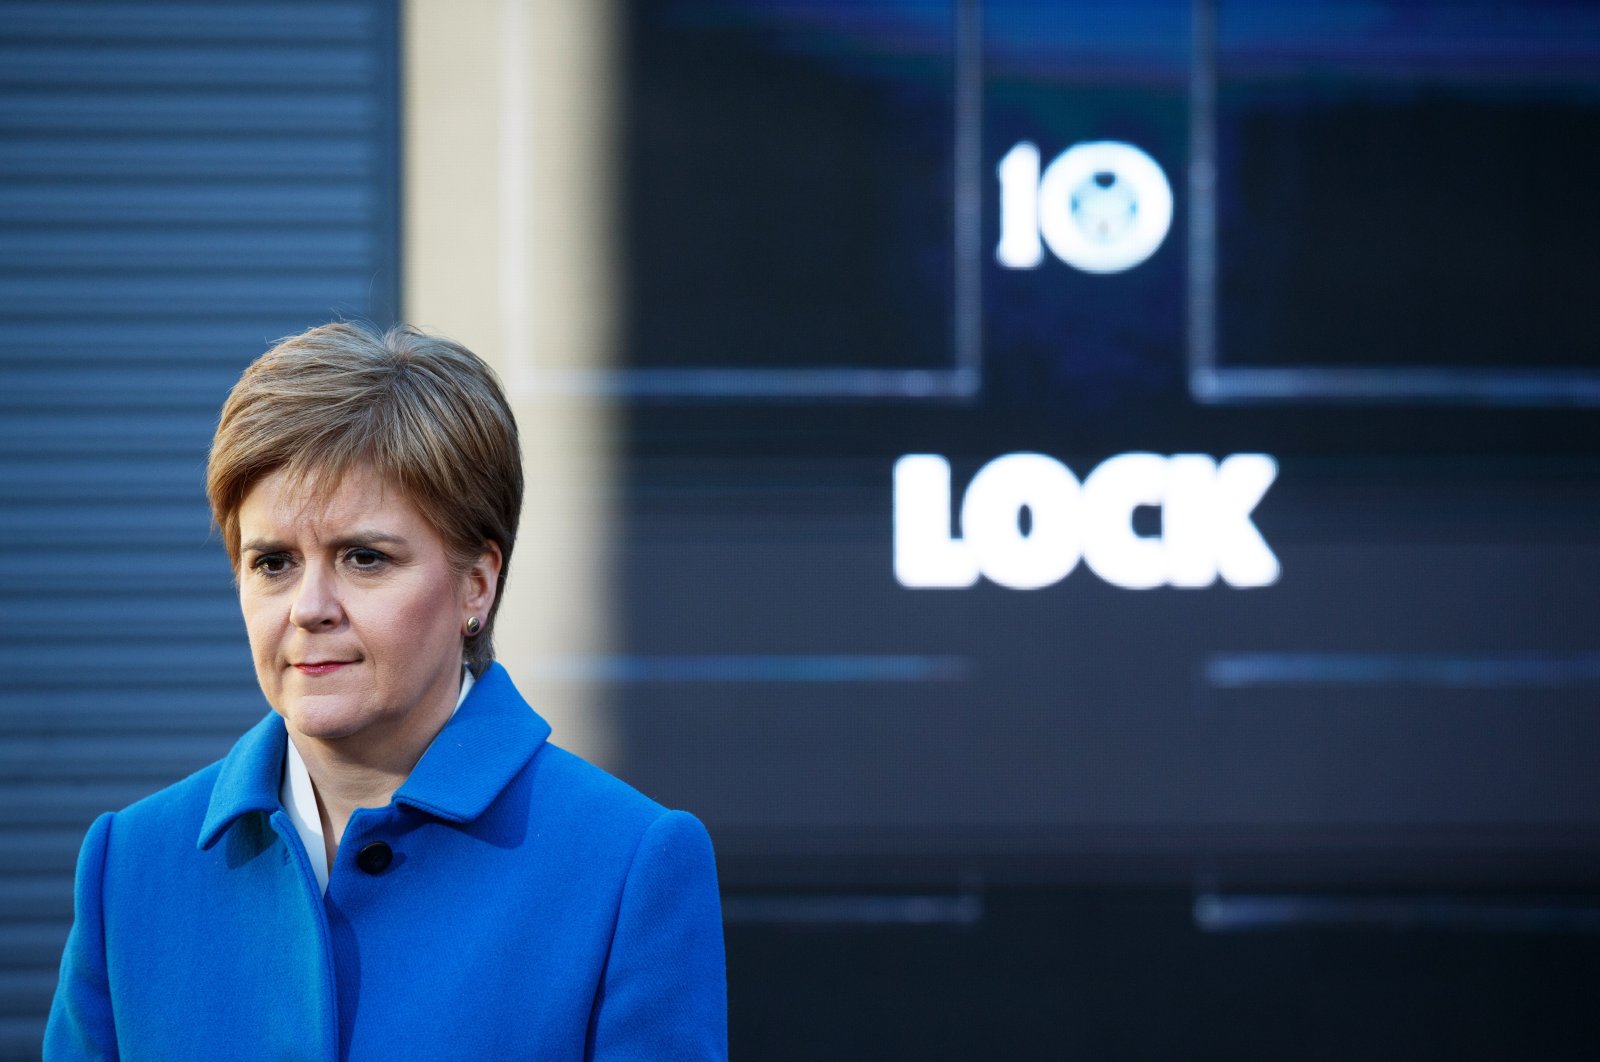 Former Scottish National Party (SNP) leader Nicola Sturgeon joins candidates on the campaign trail at Clarke Fire Services, Coatbridge, Lanarkshire, Scotland, U.K., Dec. 9, 2019. (EPA Photo)